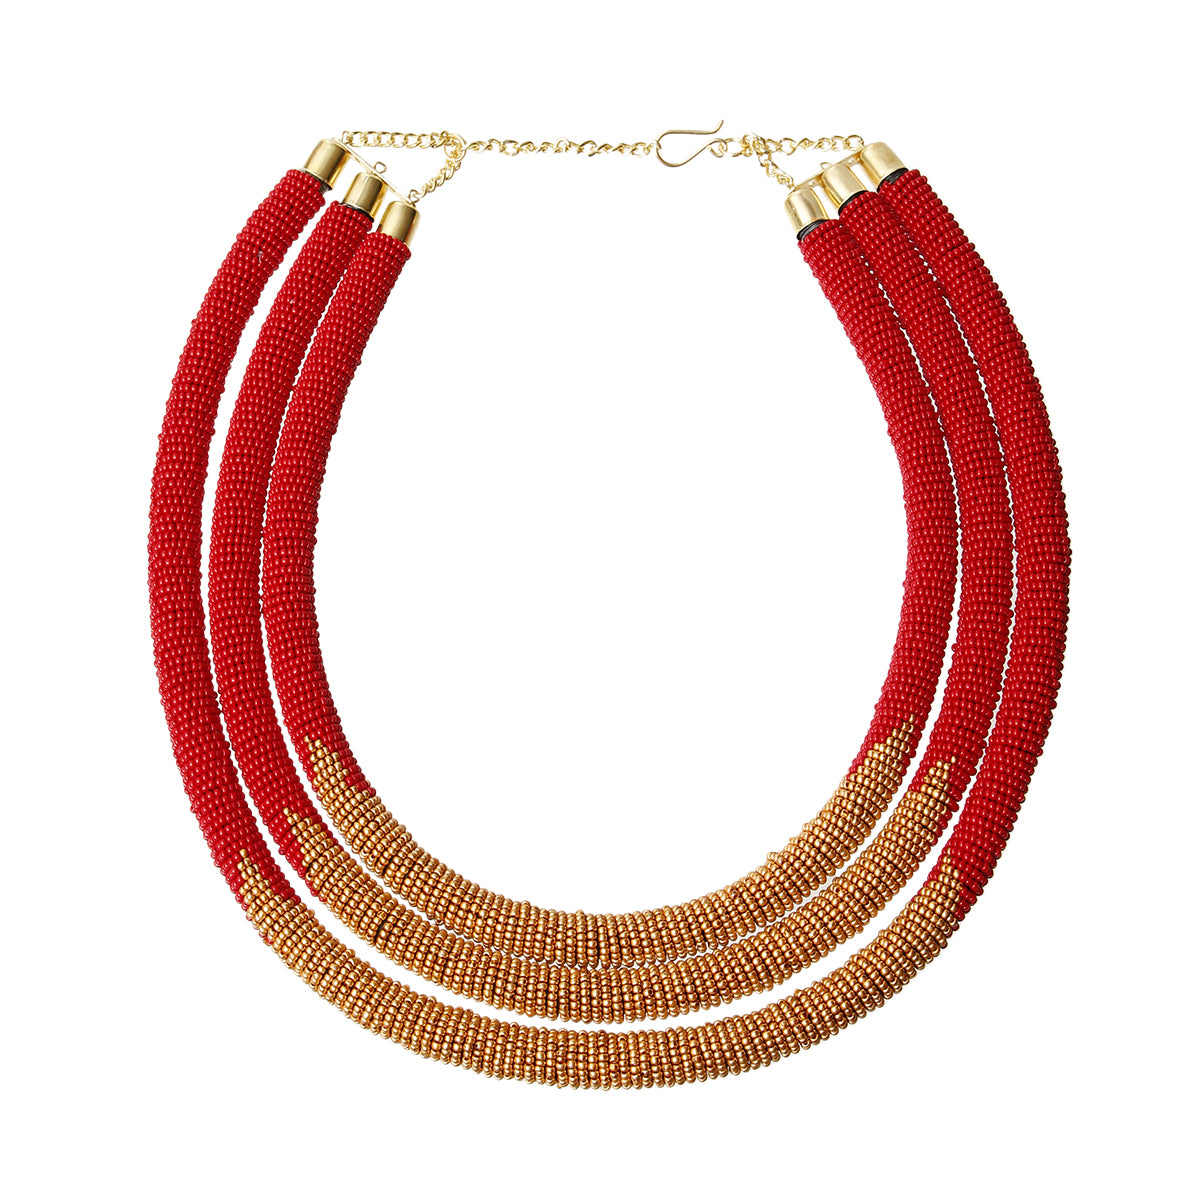 Zulu Maasai Beaded Necklace